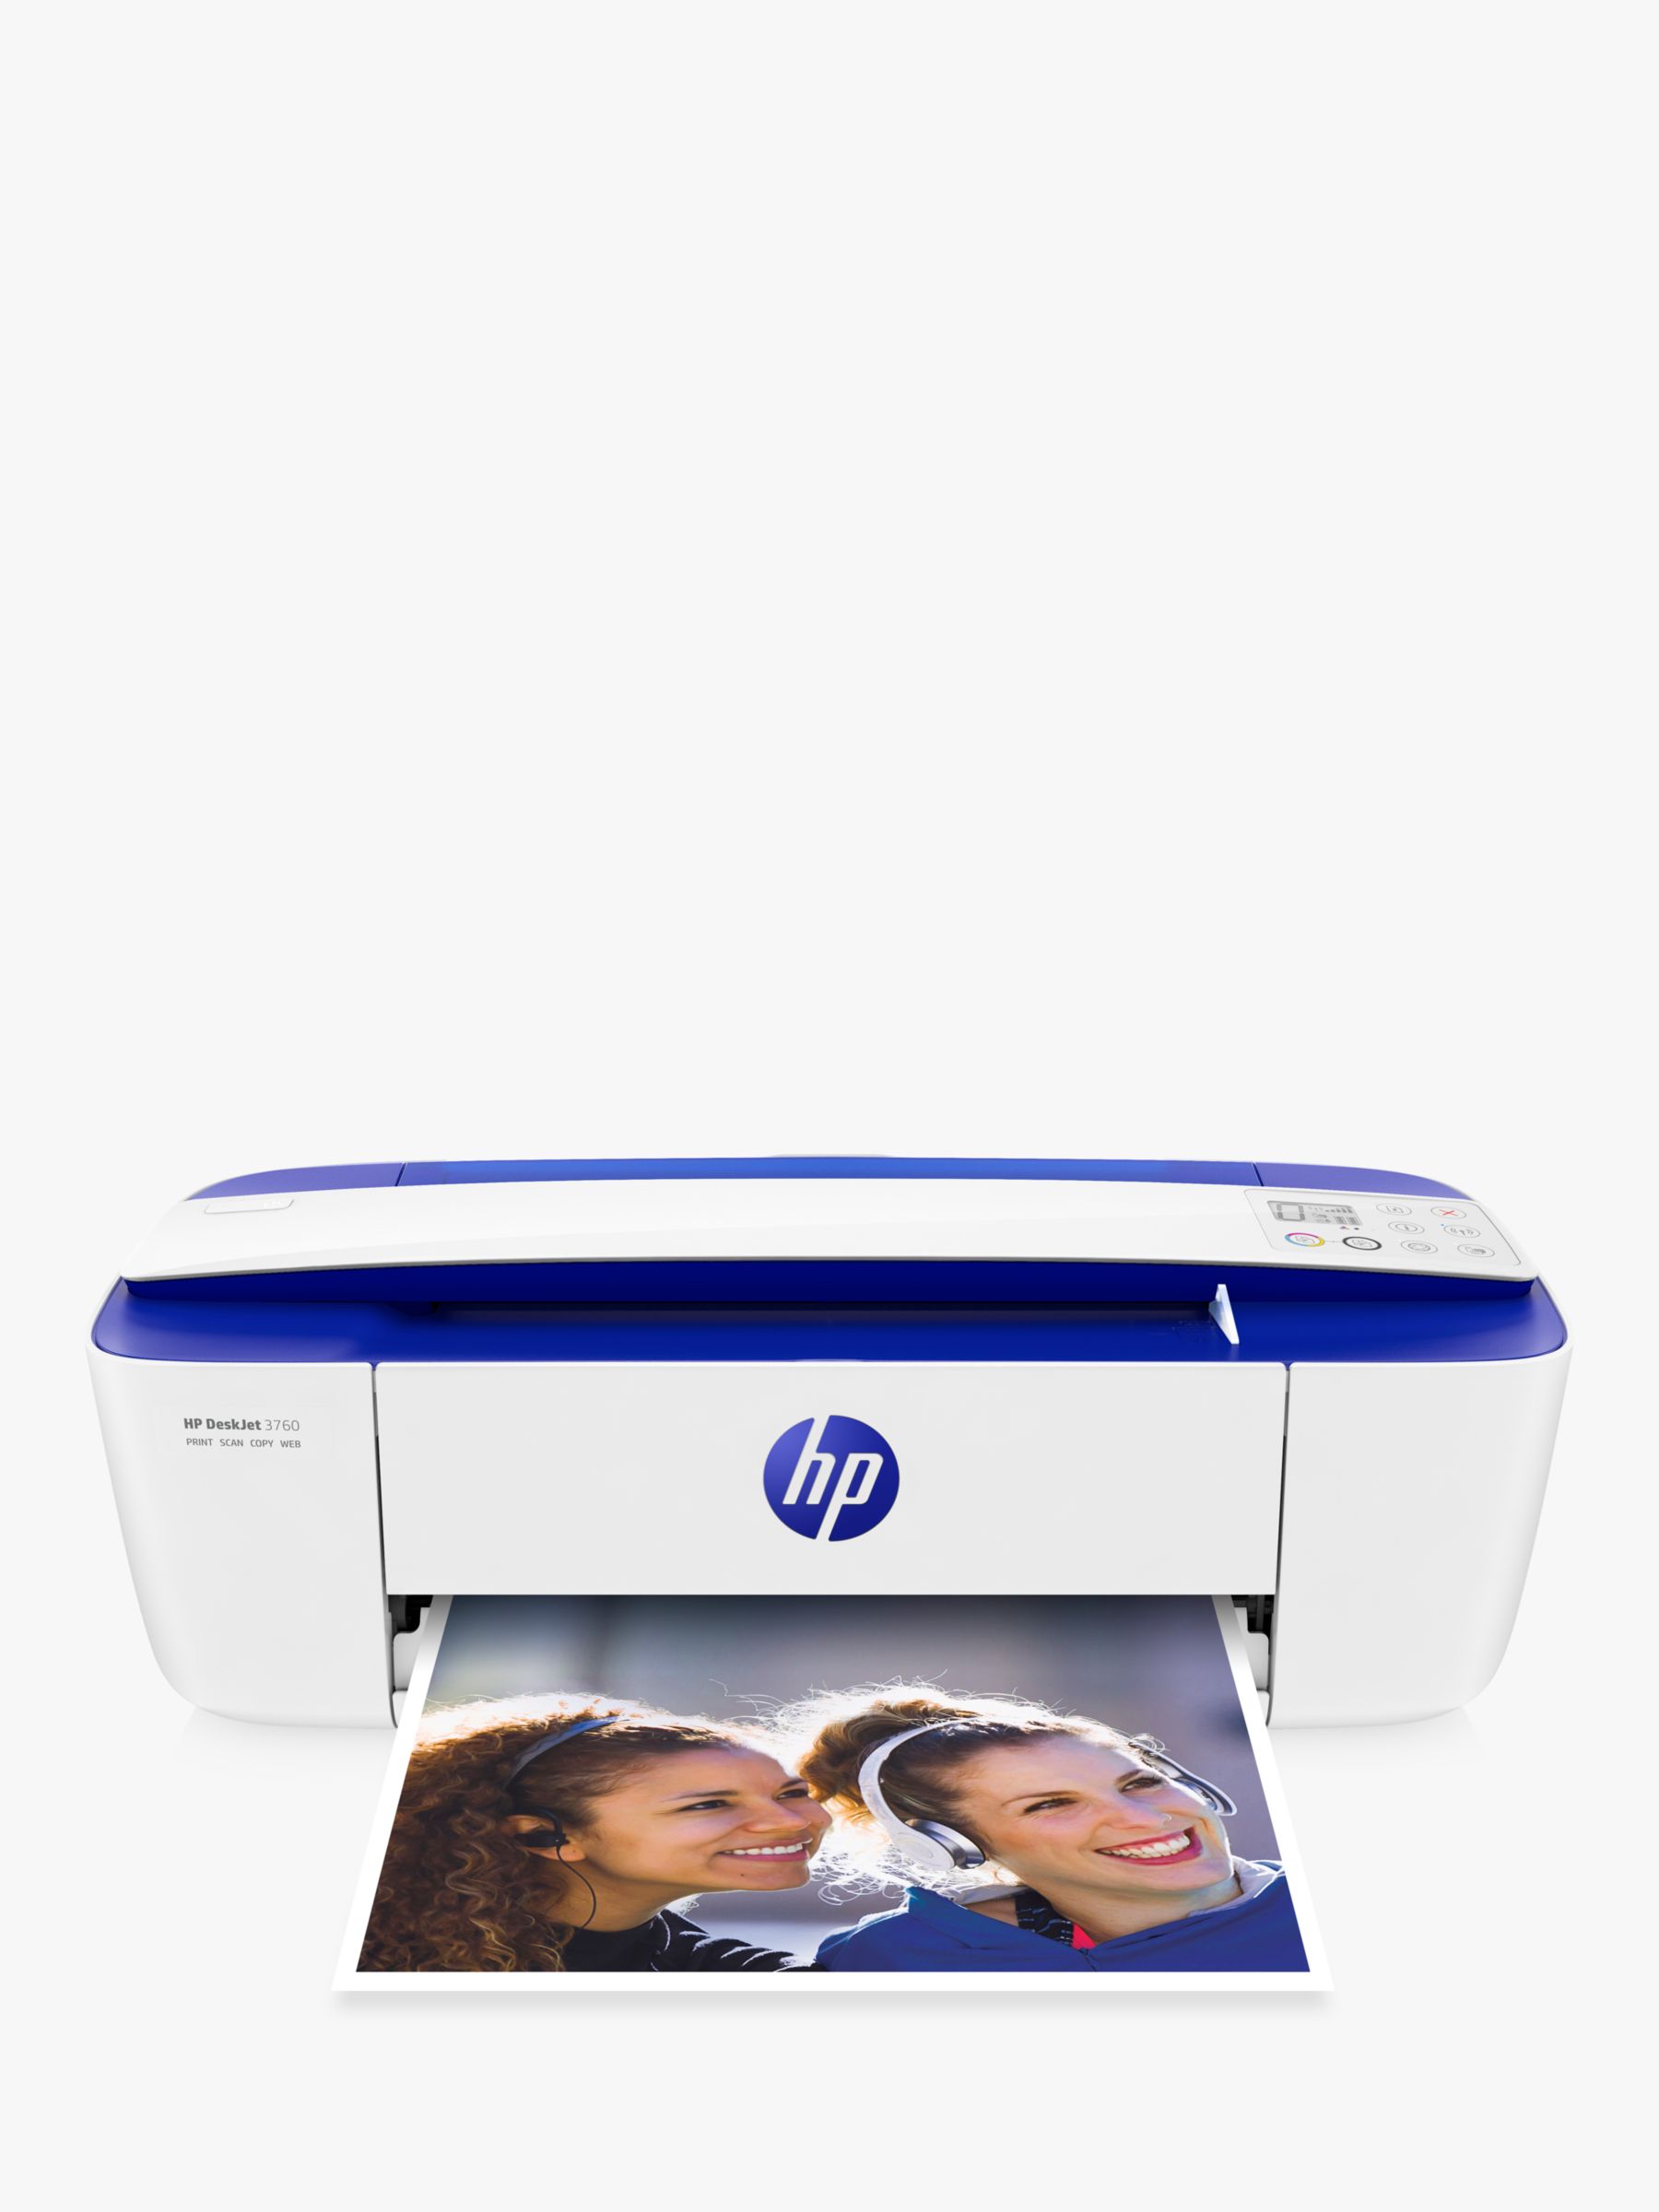 HP Deskjet 3760 All-in-One Wireless Printer, HP Instant Ink